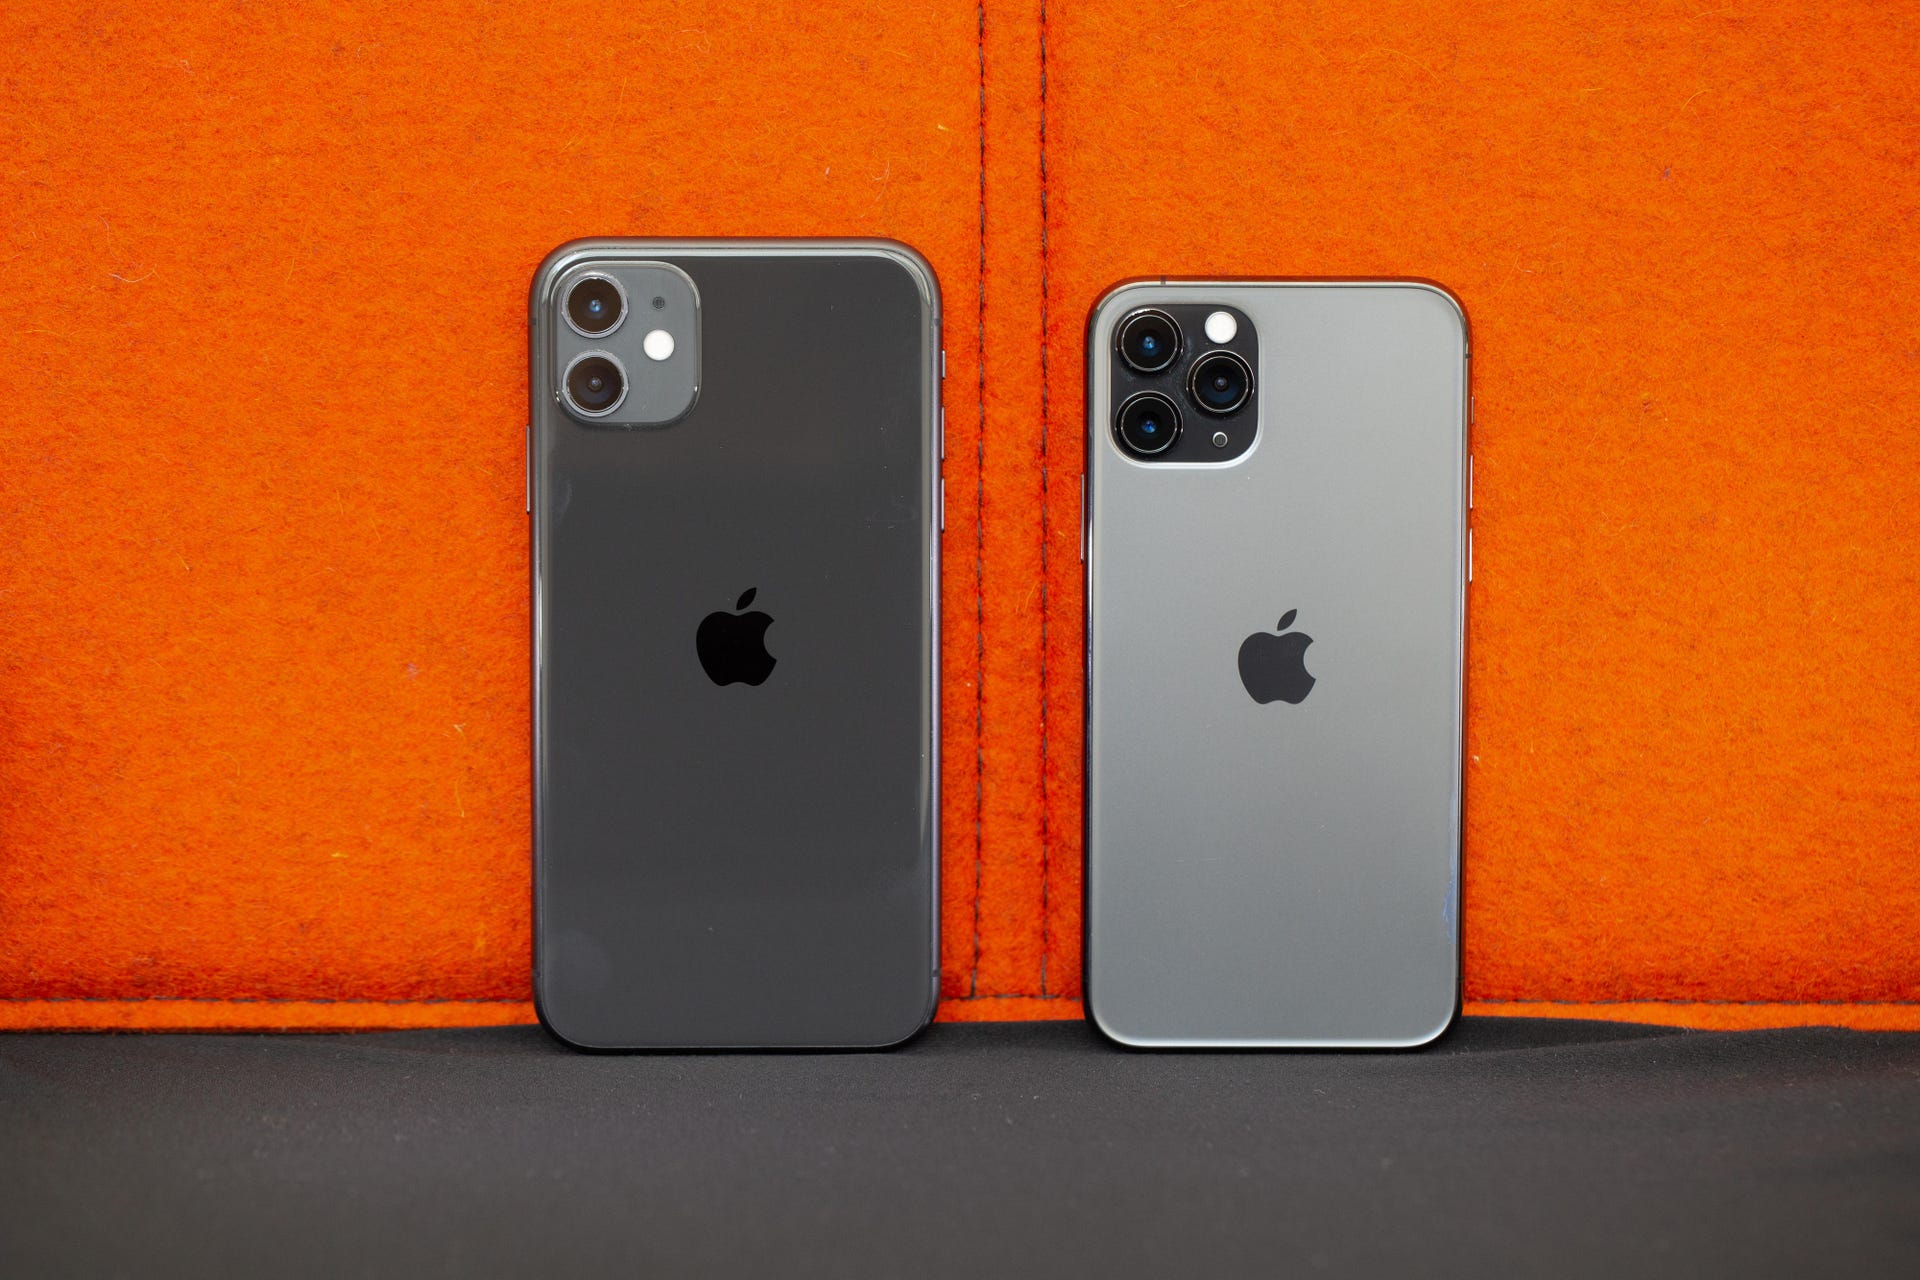 hærge Pudsigt lodret iPhone 11 and 11 Pro drop test: The most durable smartphone glass ever? -  CNET